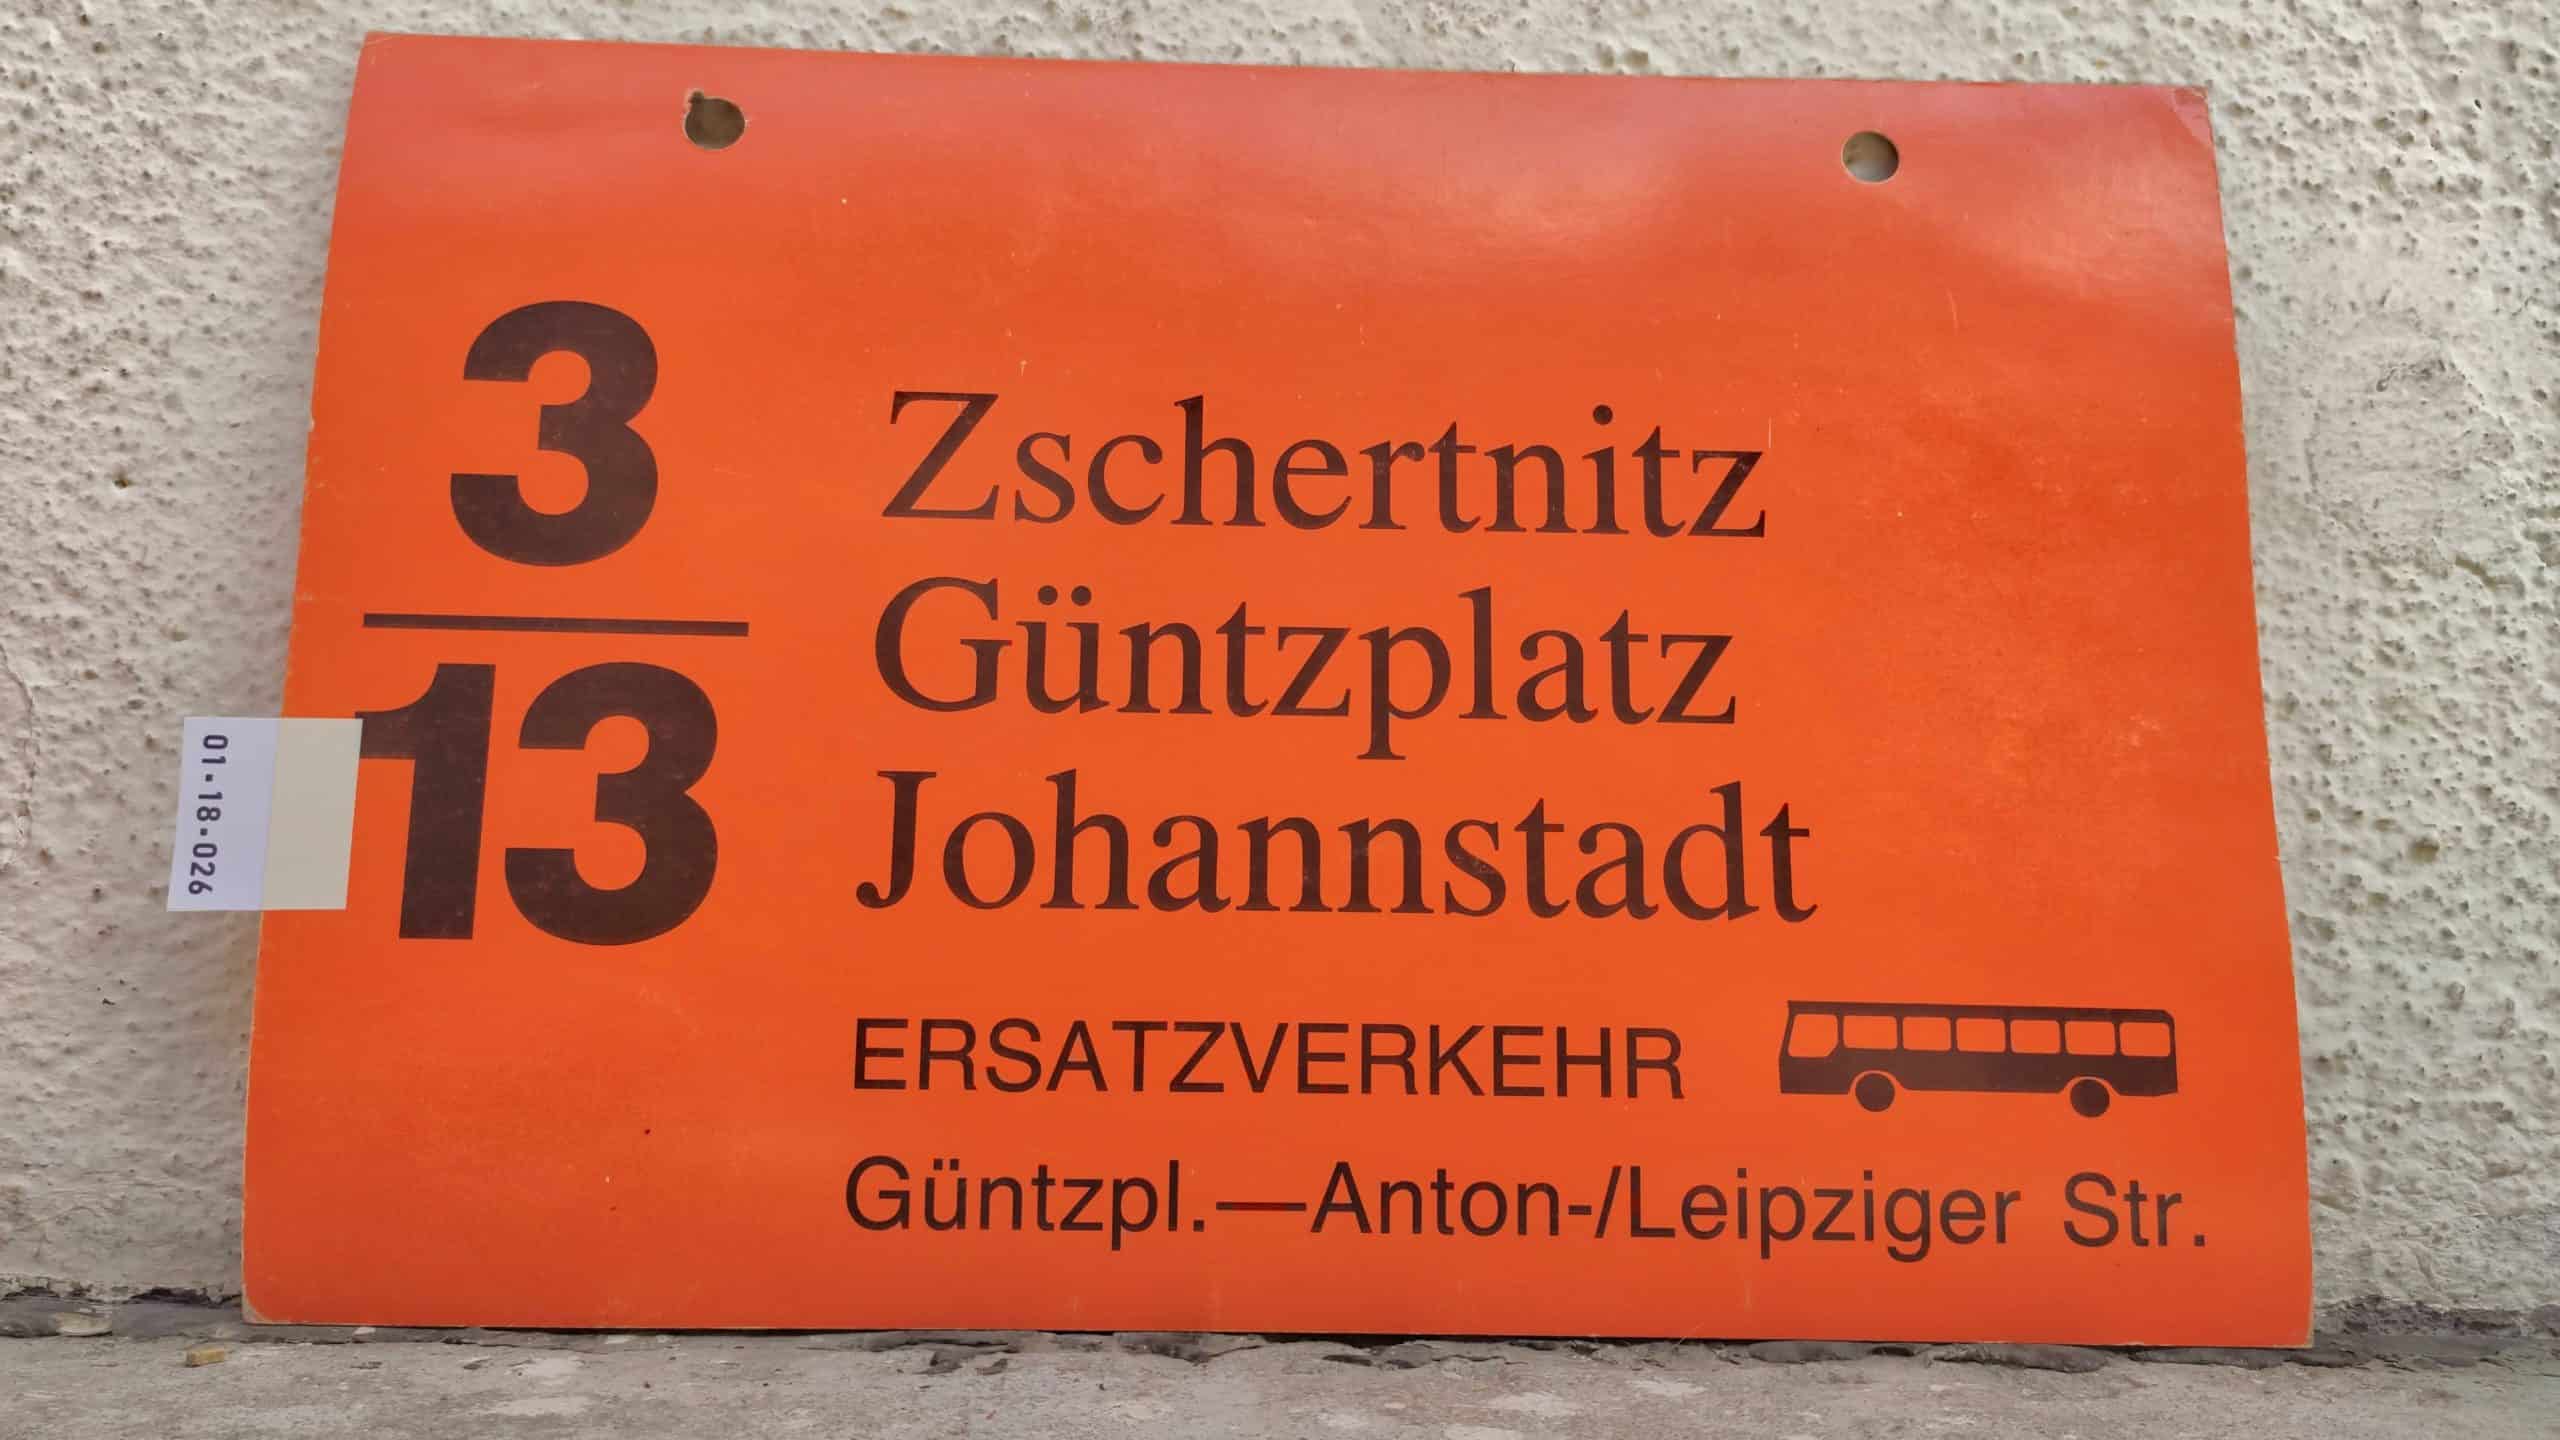 3/13 Zschertnitz – Johannstadt